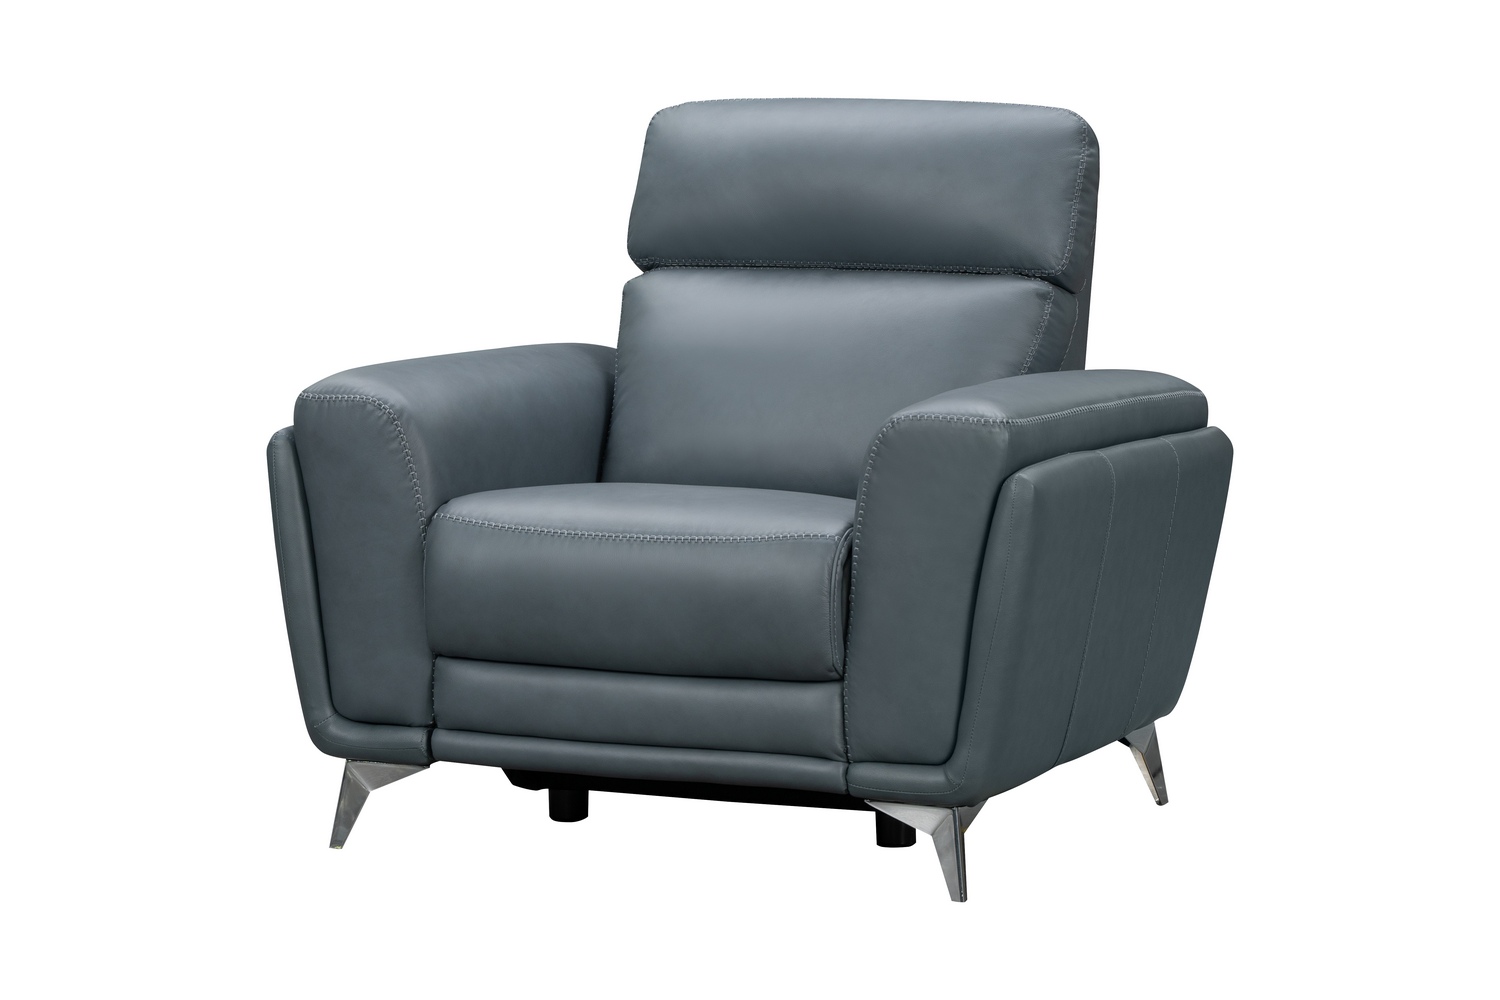 Barcalounger Cameron Power Recliner Chair with Power Head Rest - Masen Bluegray/Leather Match